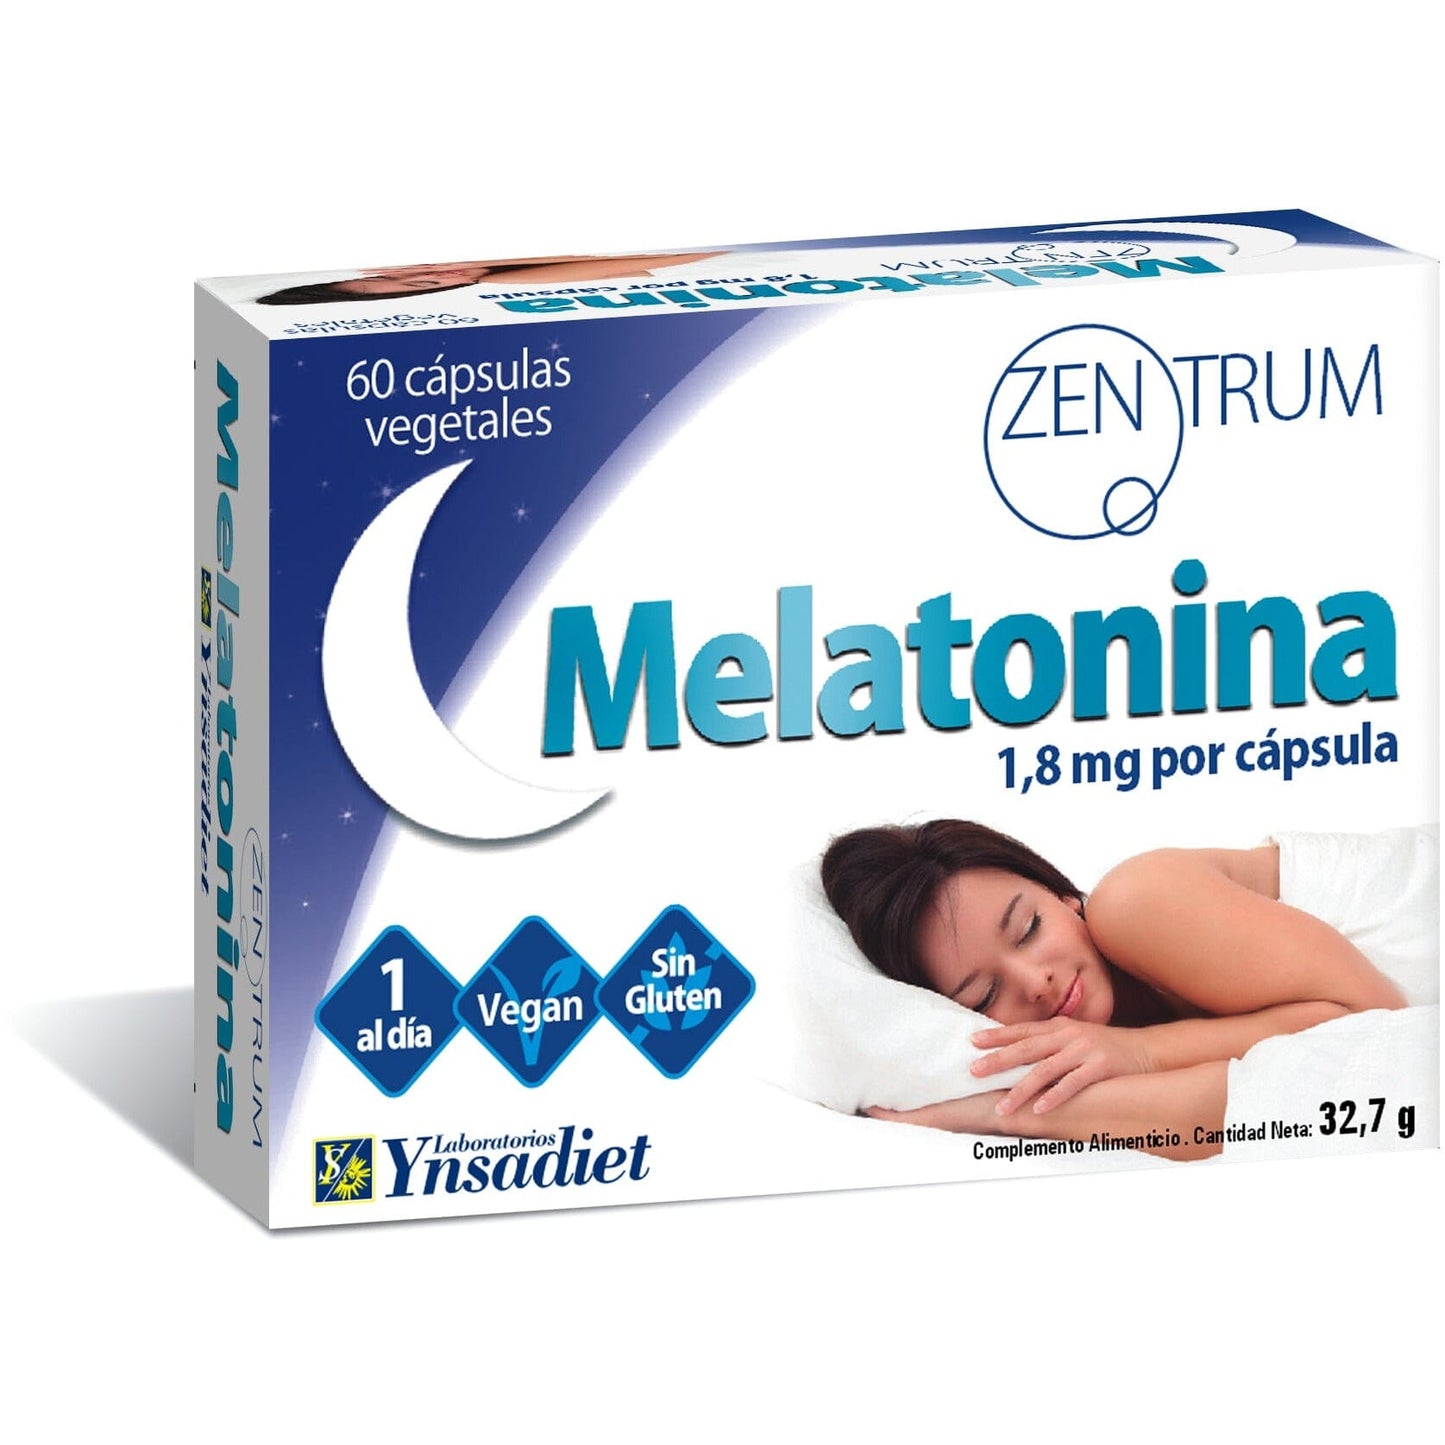 Melatonina 60 cápsulas | Ynsadiet - Dietetica Ferrer